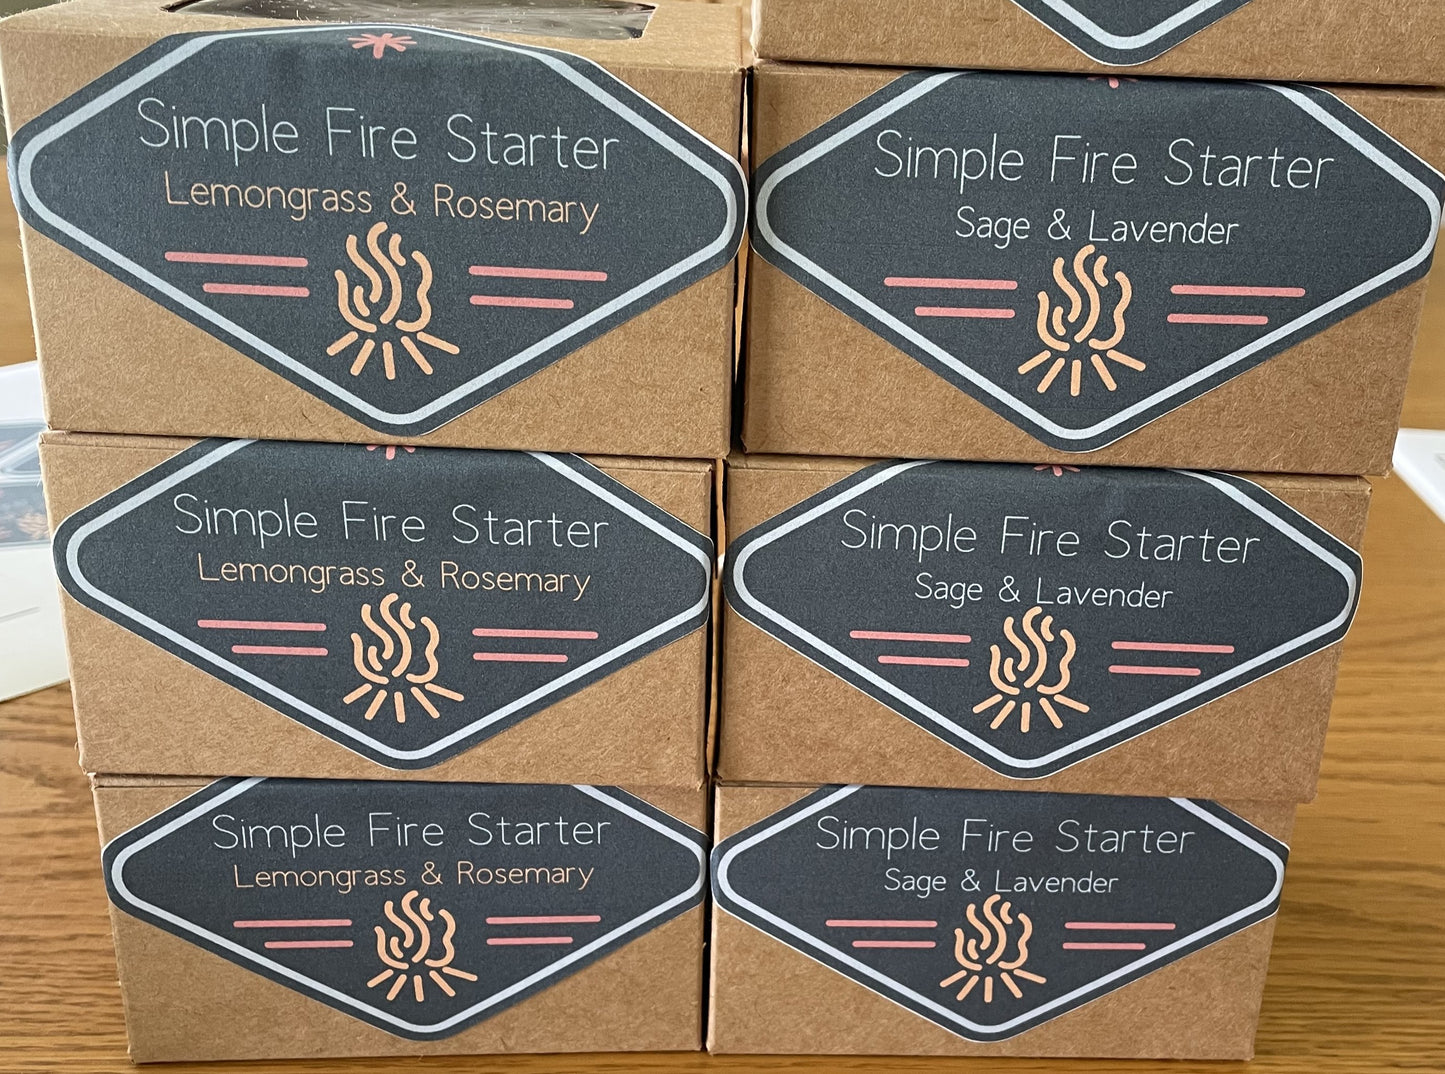 Simple Fire Starters